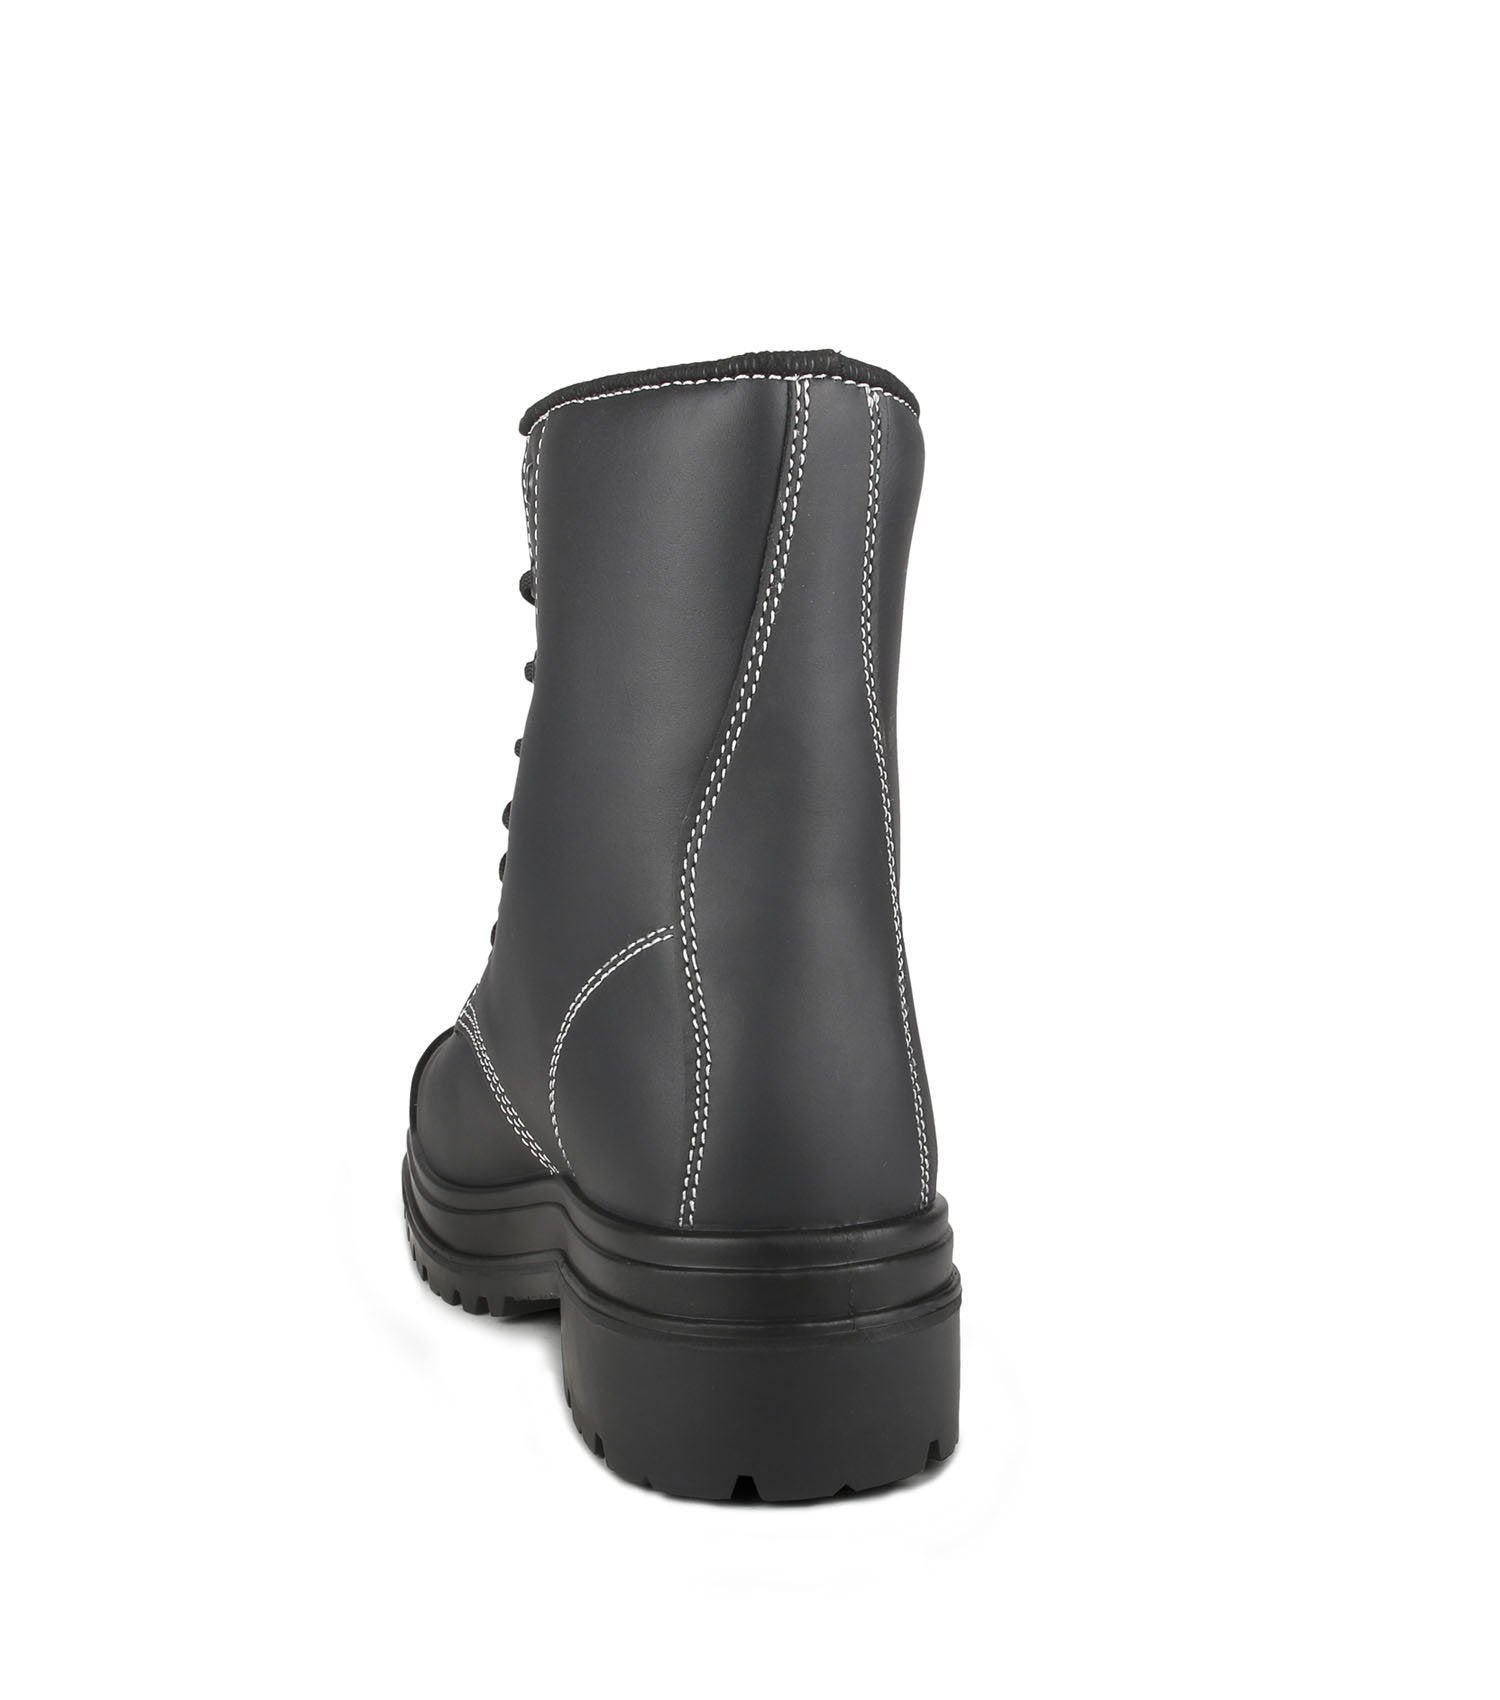 STC MetPro Steel Toe 8" Internal Metguard Men's Safety Mining Boots | Black | Sizes 4 - 14 Work Boots - Cleanflow